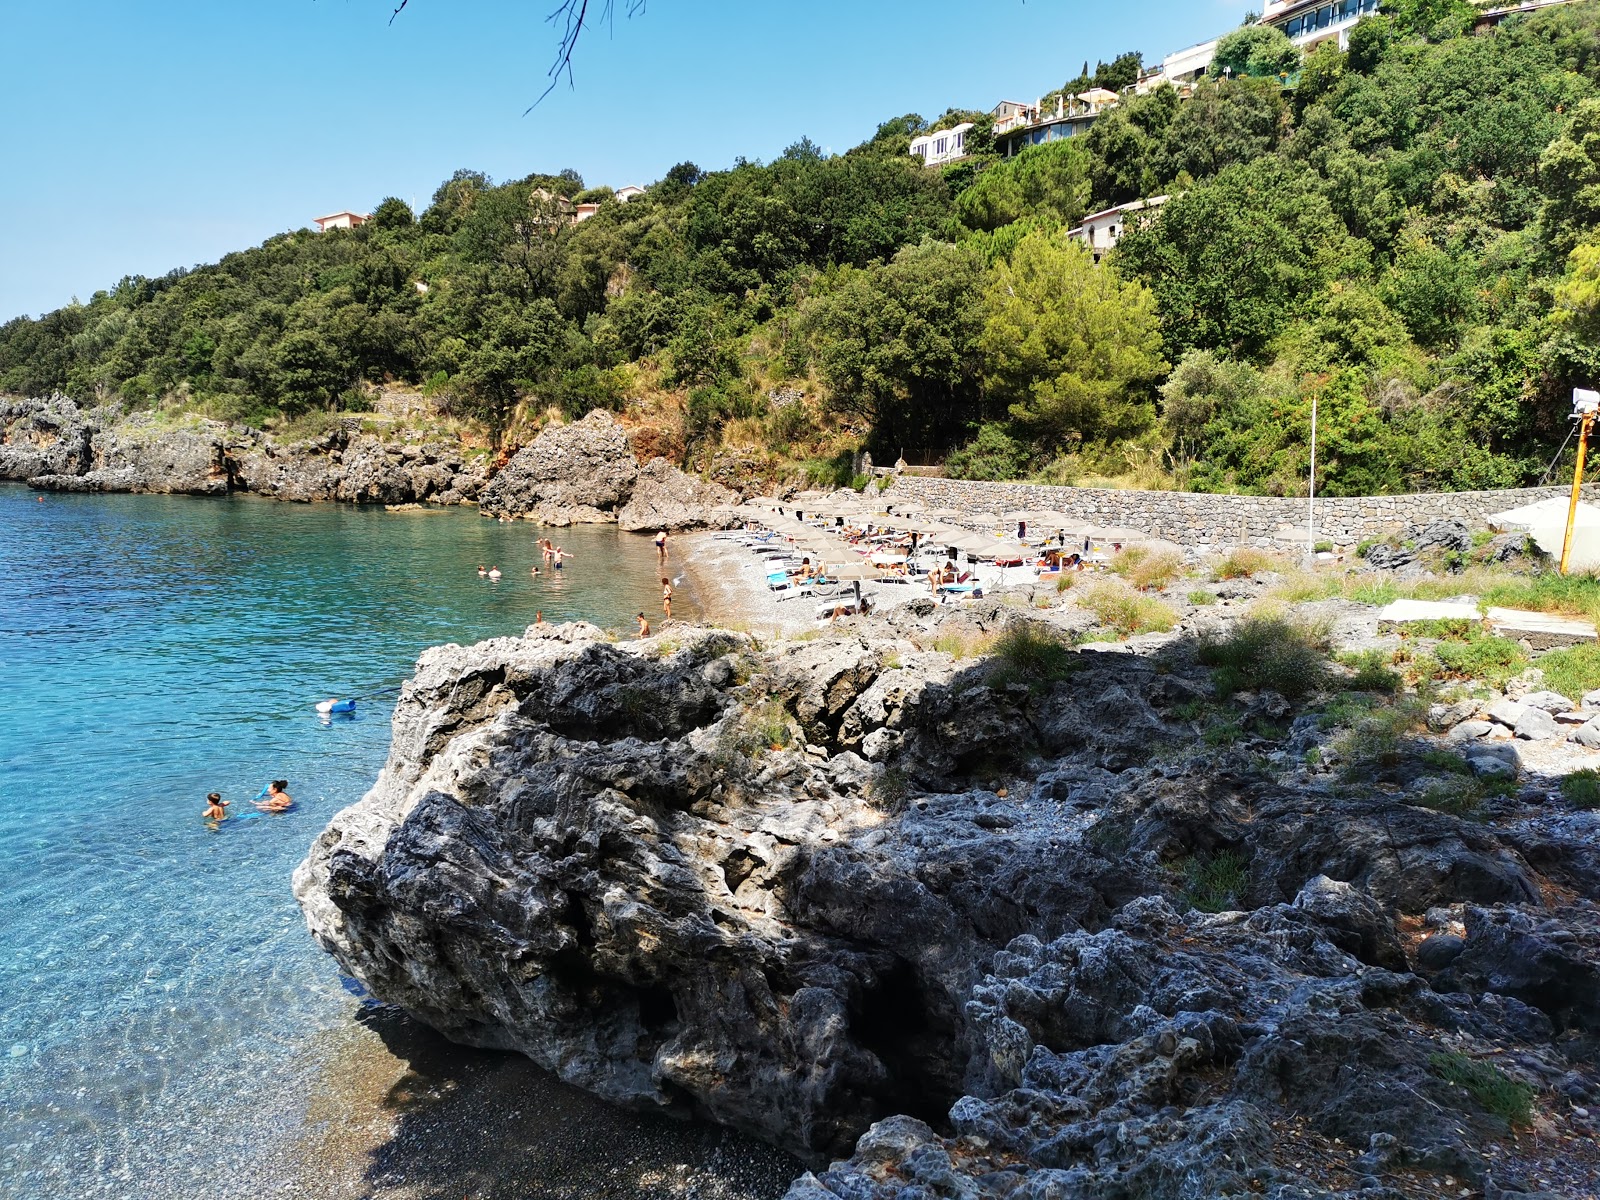 Spiaggia Portacquafridda'in fotoğrafı plaj tatil beldesi alanı